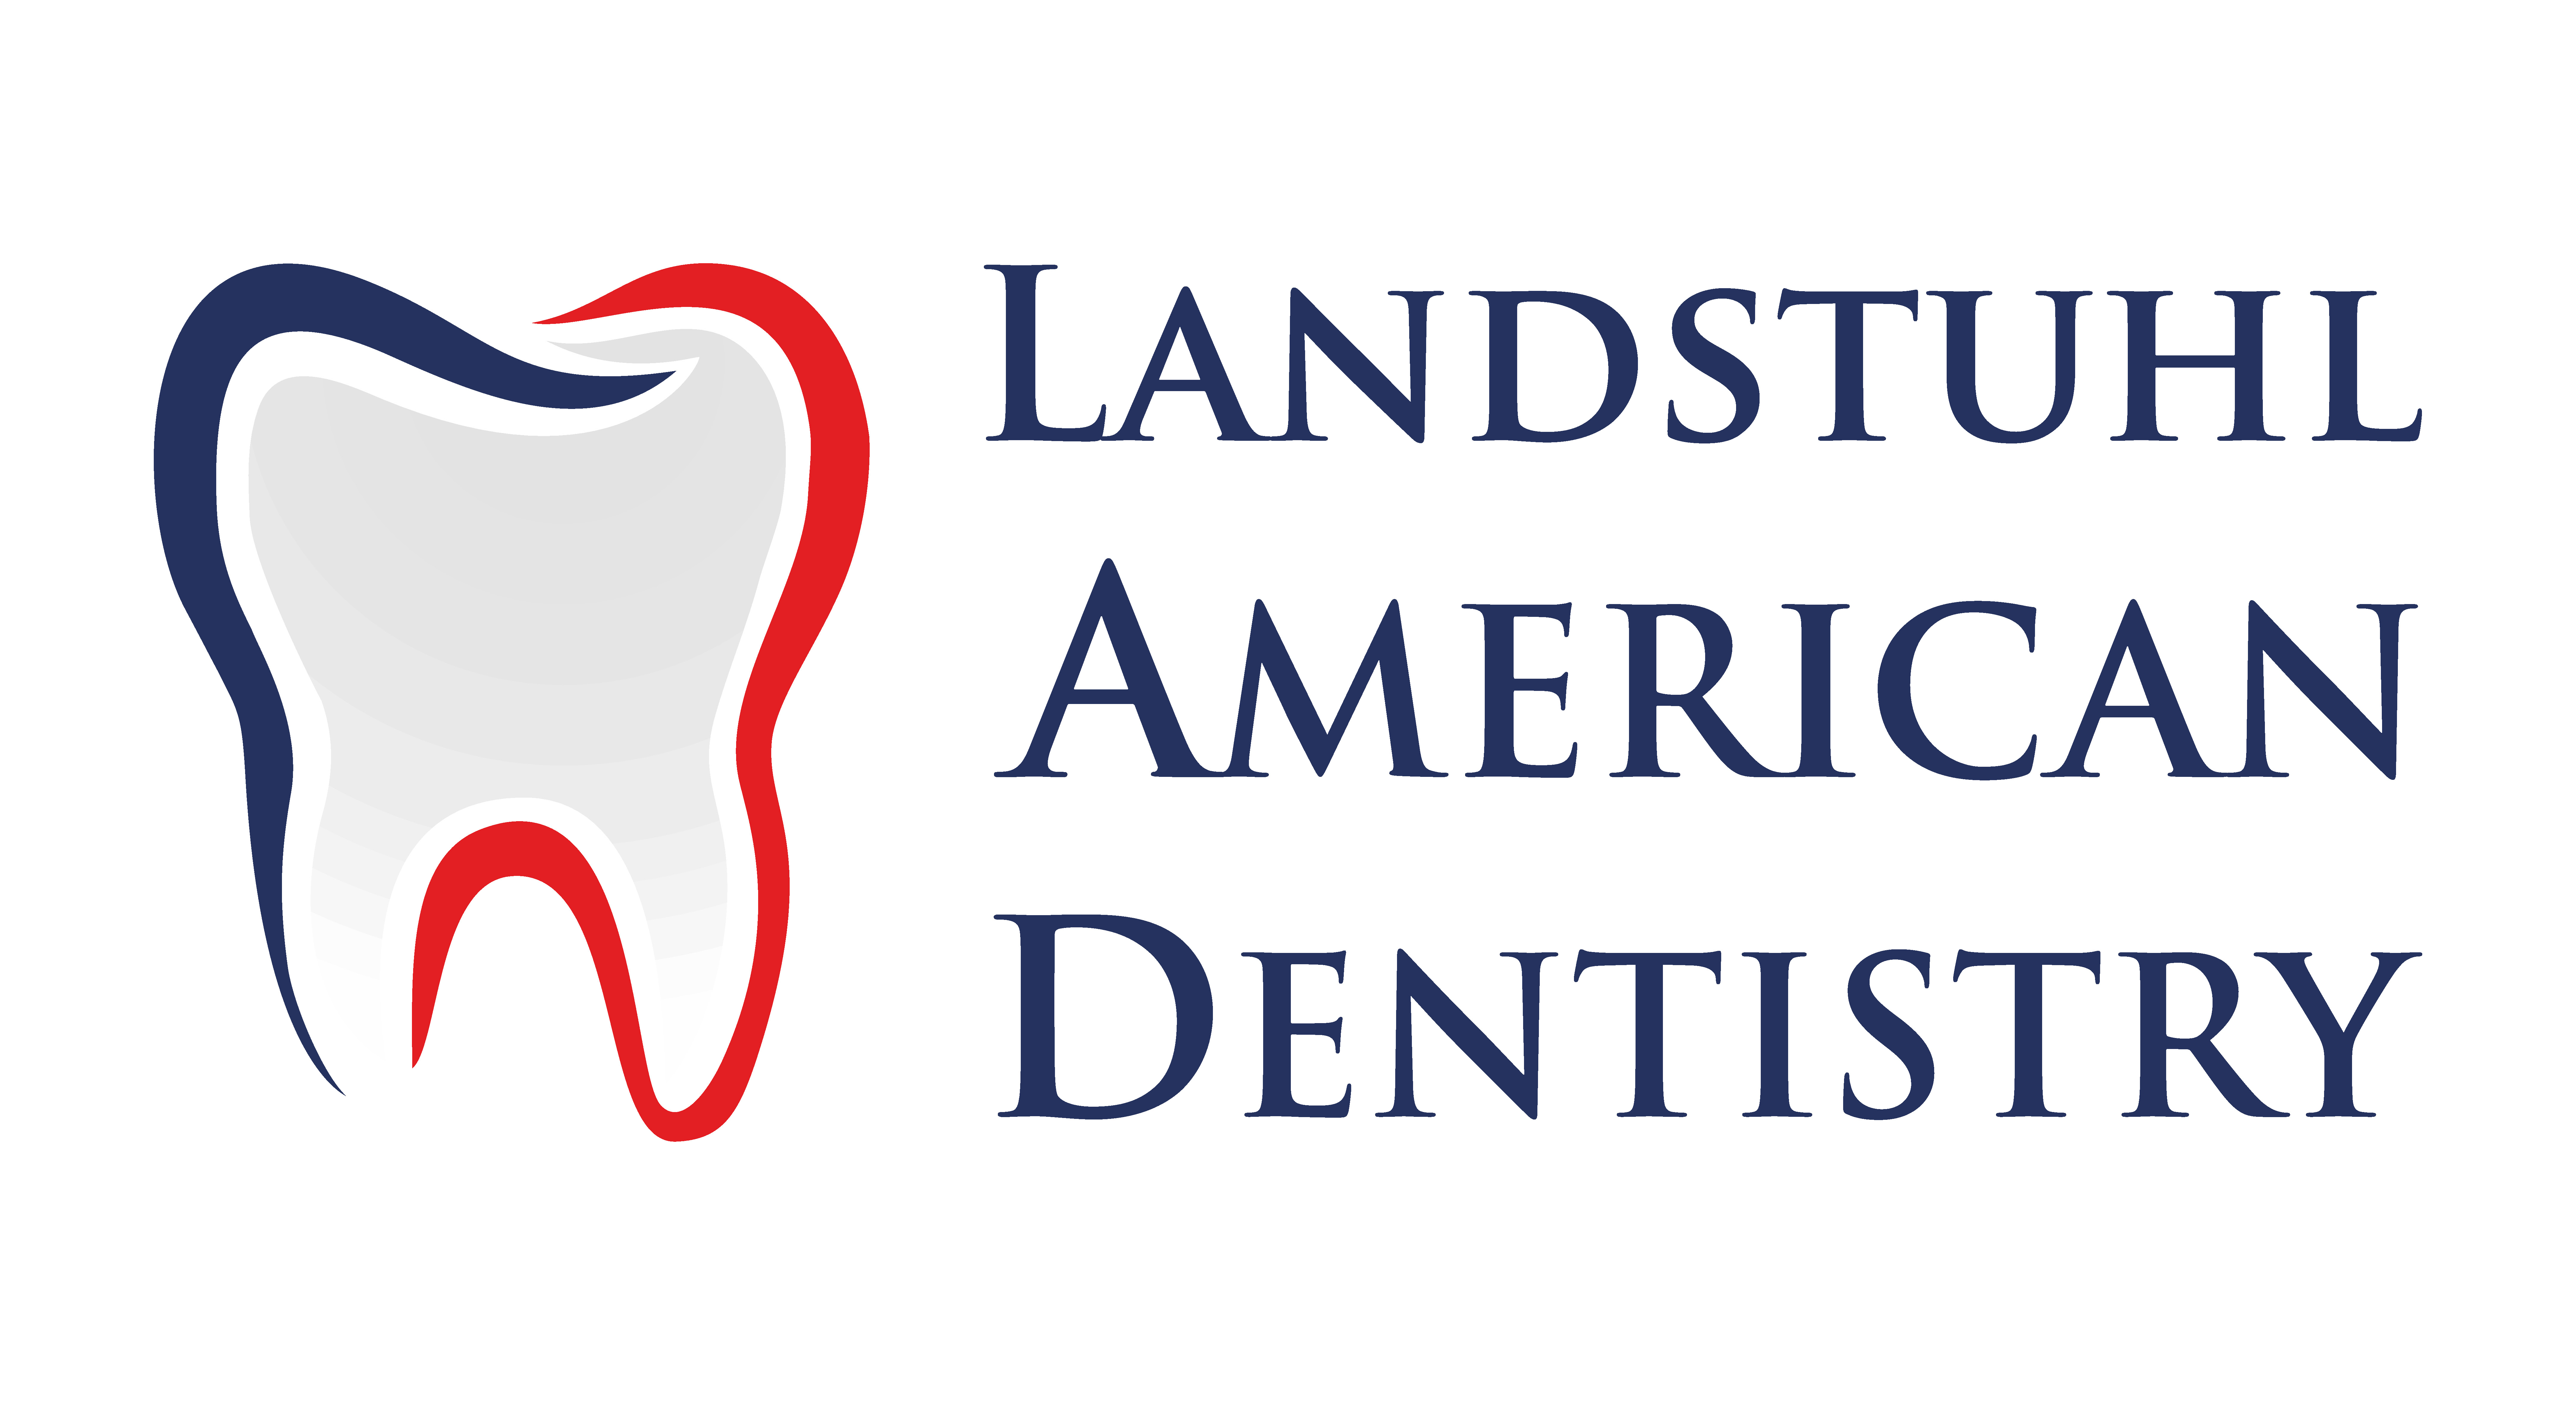 Landstuhl American Dentistry JPG.jpg